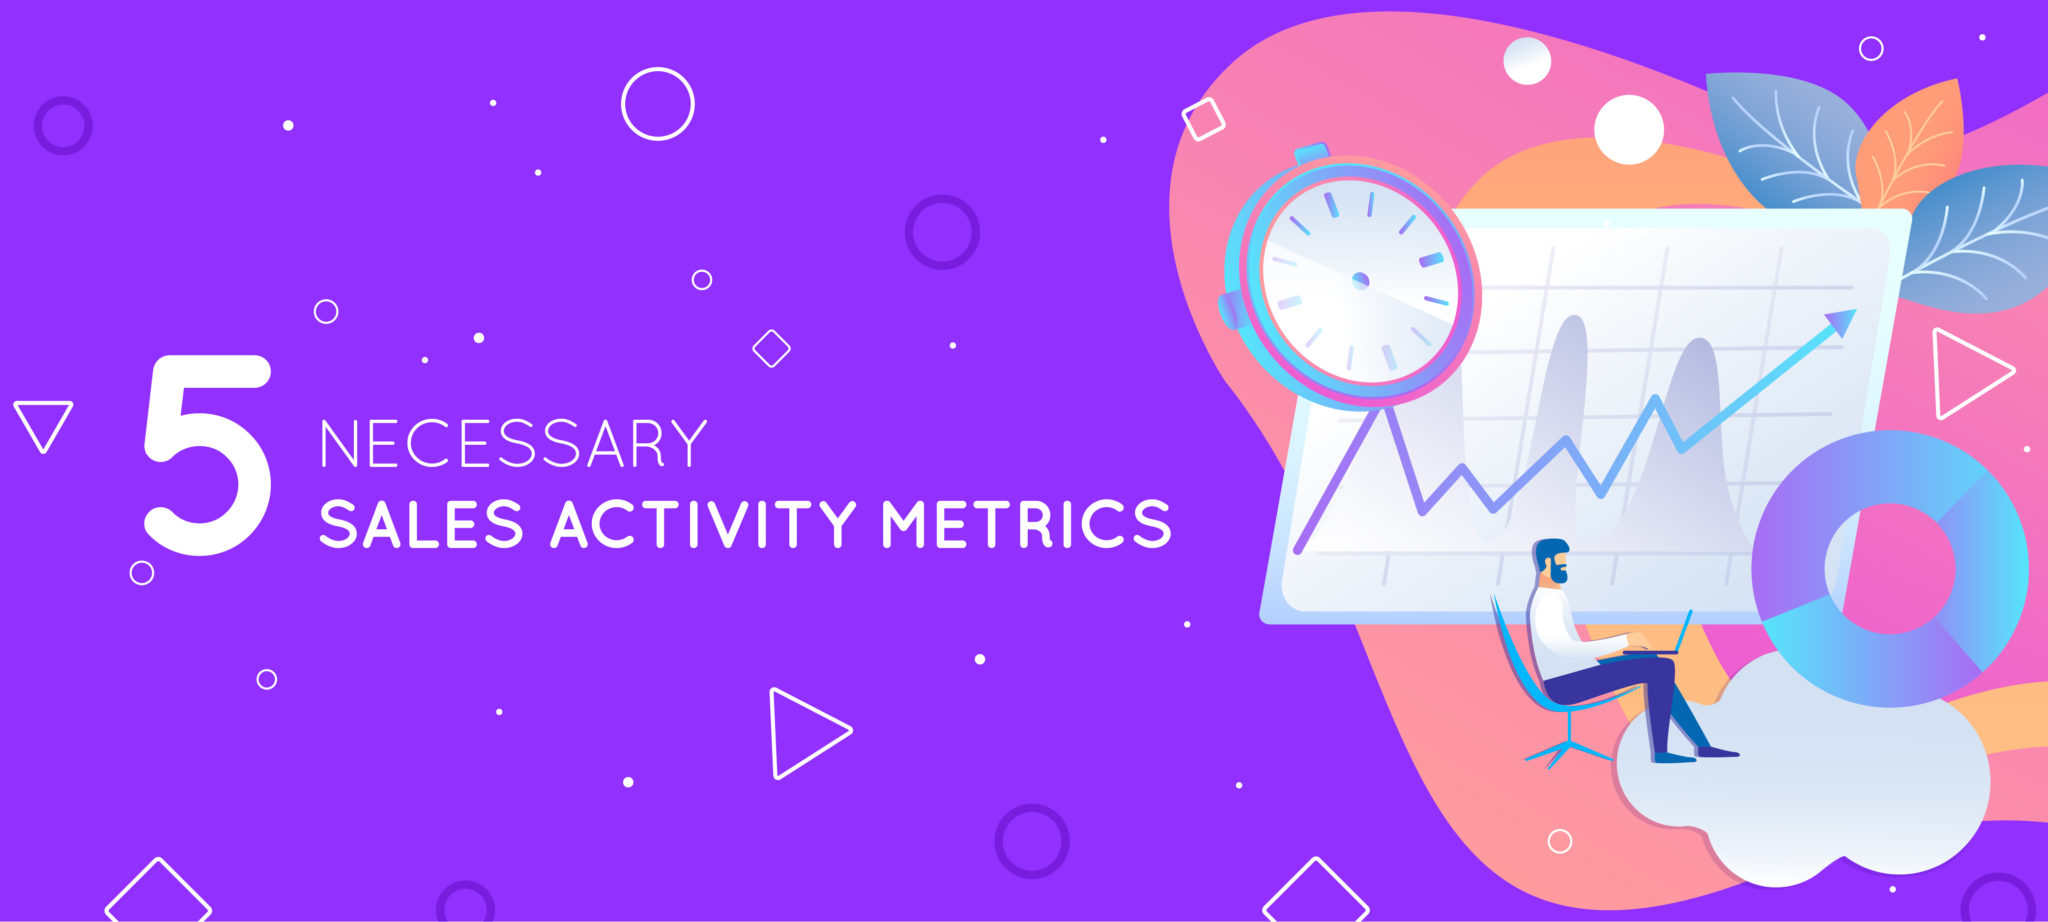 Sales activity metrics - banner